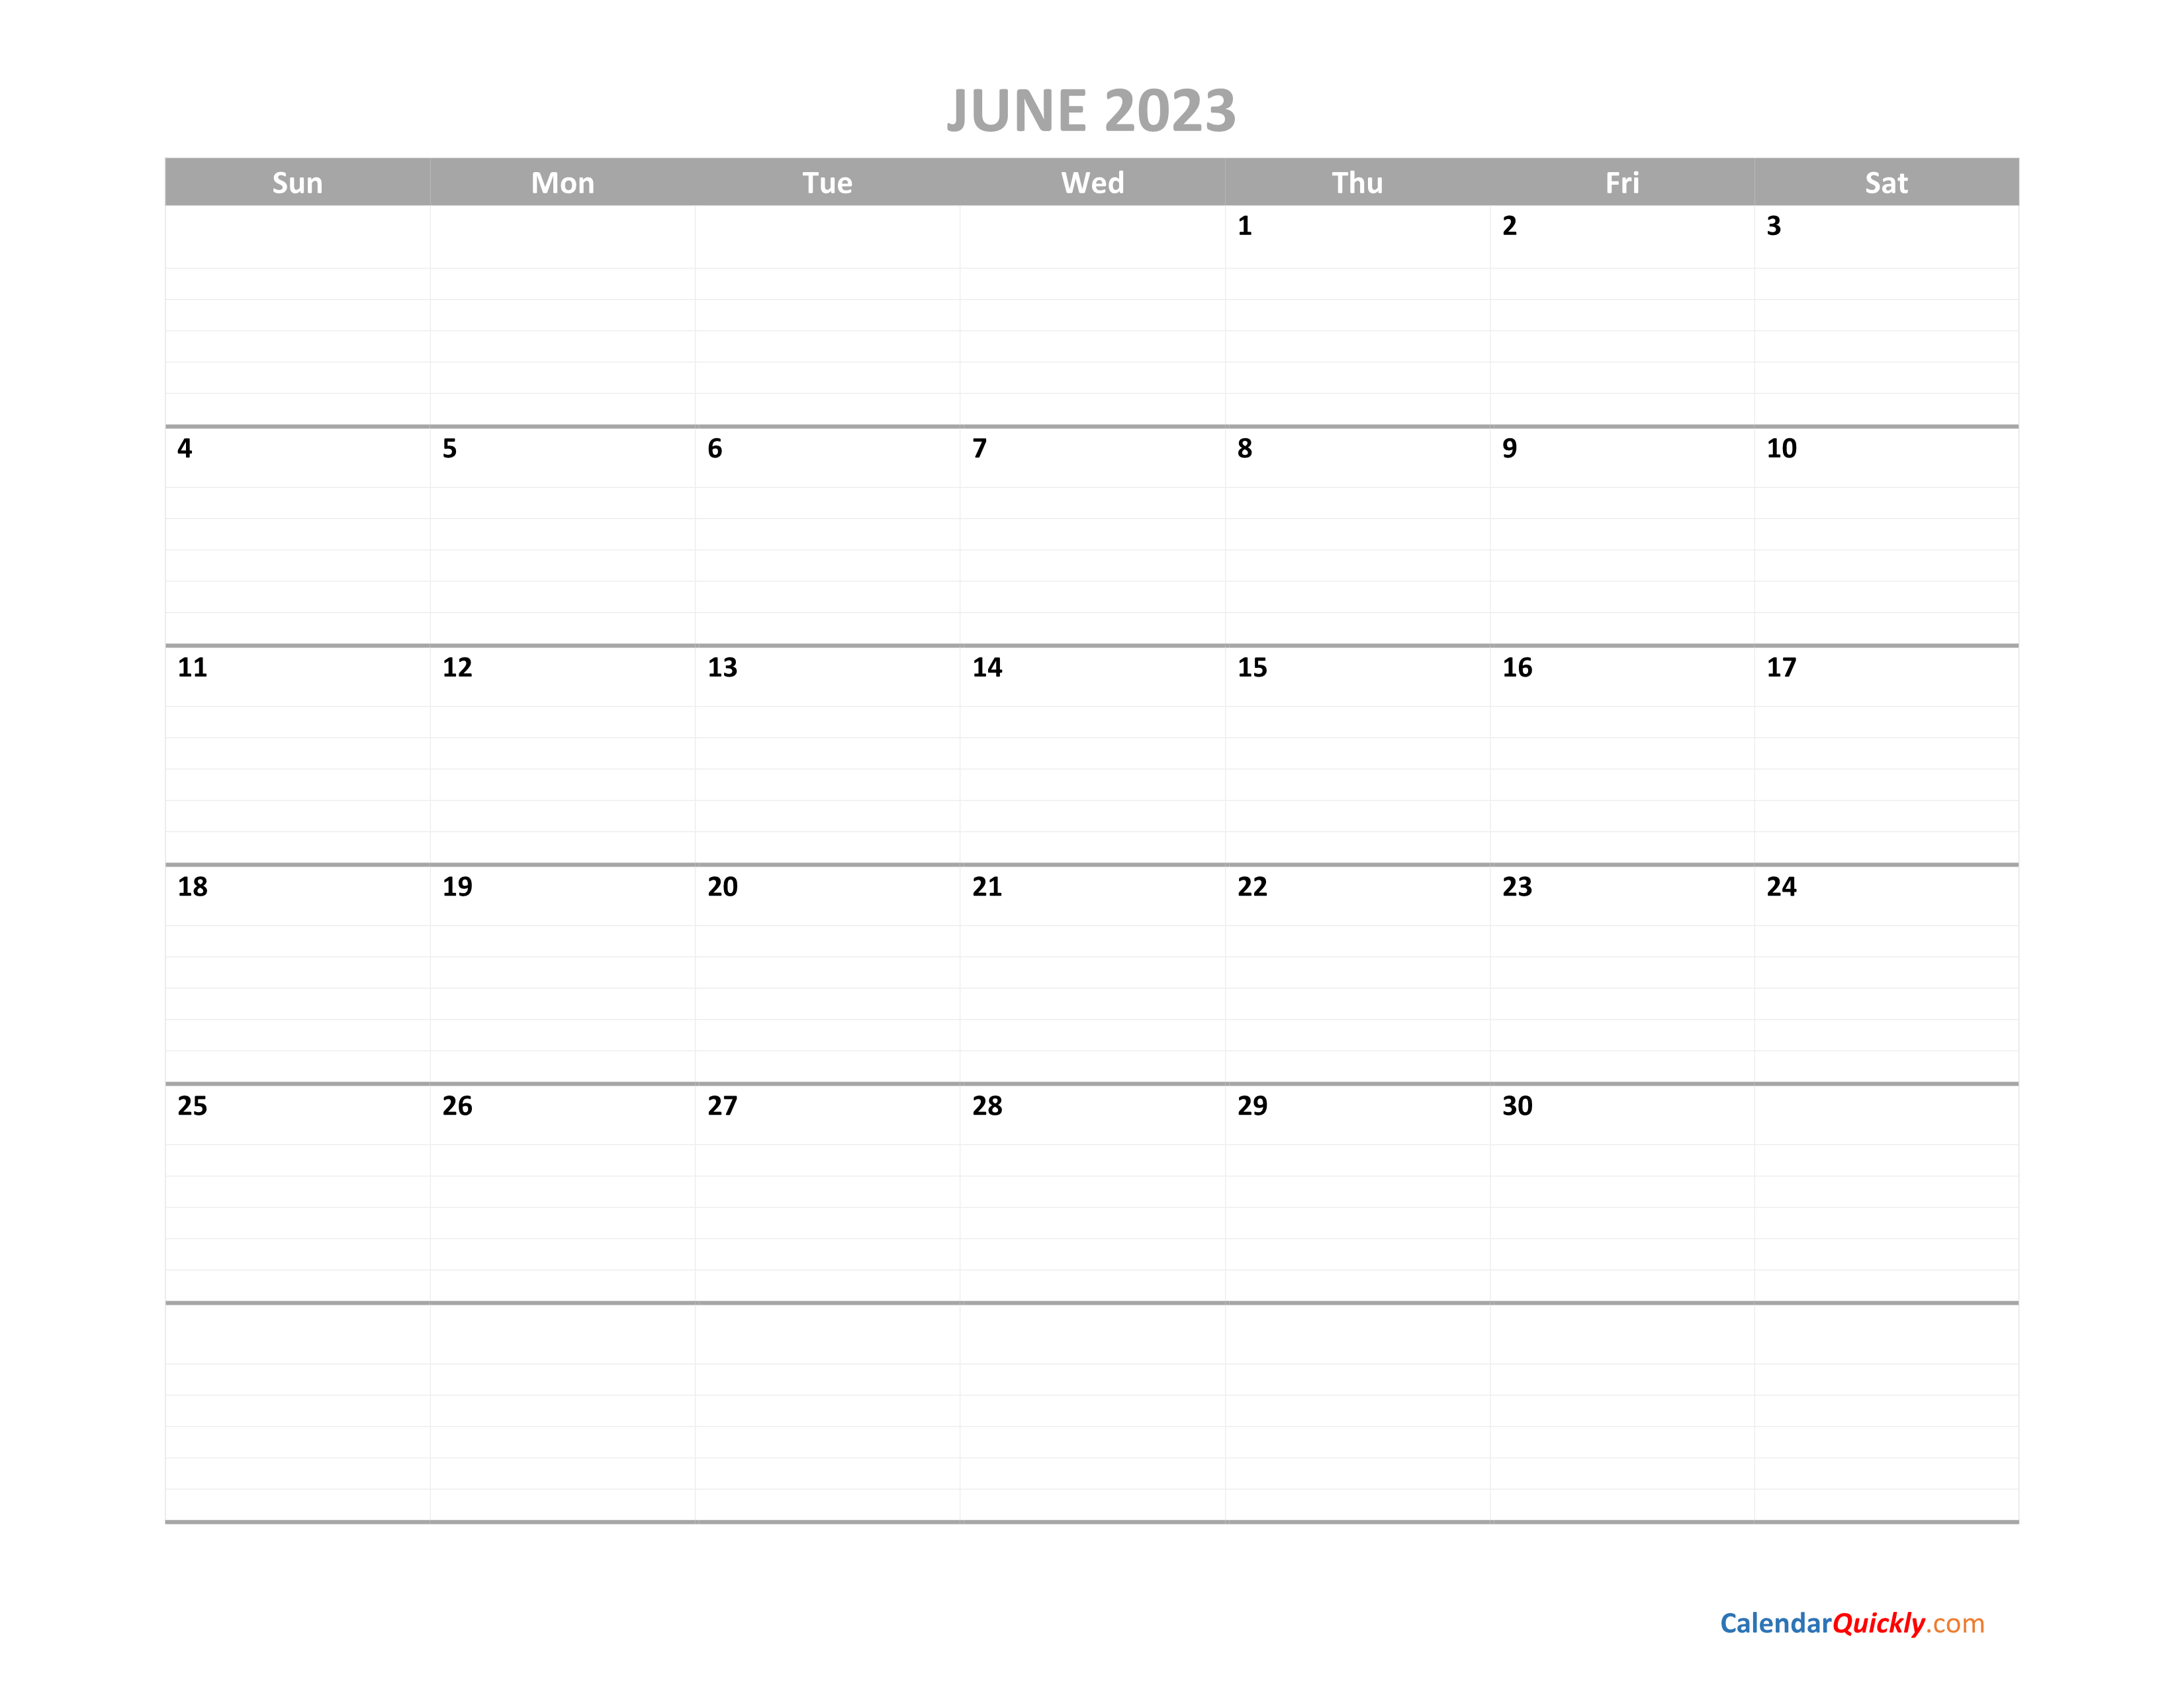 June Calendar 2023 Printable Calendar Quickly